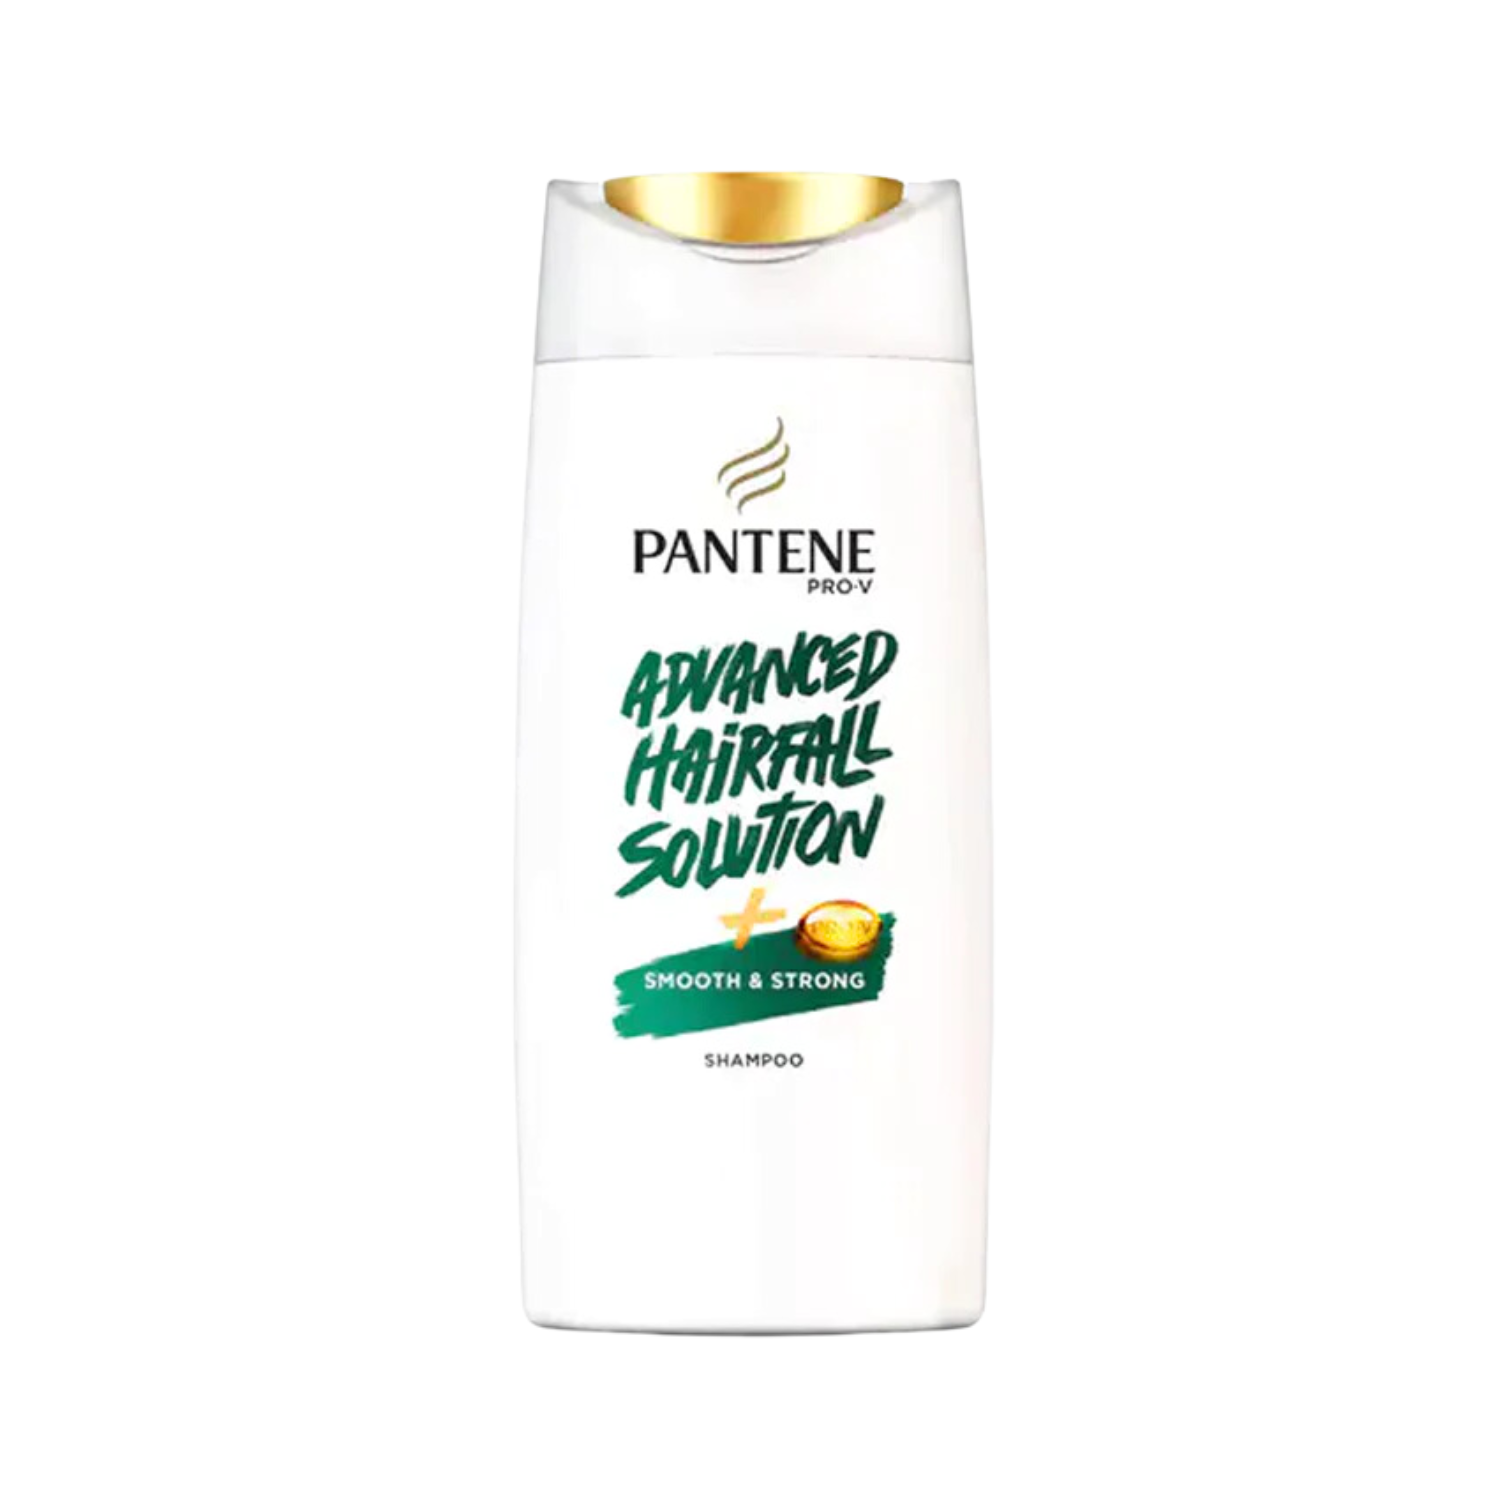 pantene-advanced-hair-fall-solution-smooth-strong-shampoo-650ml